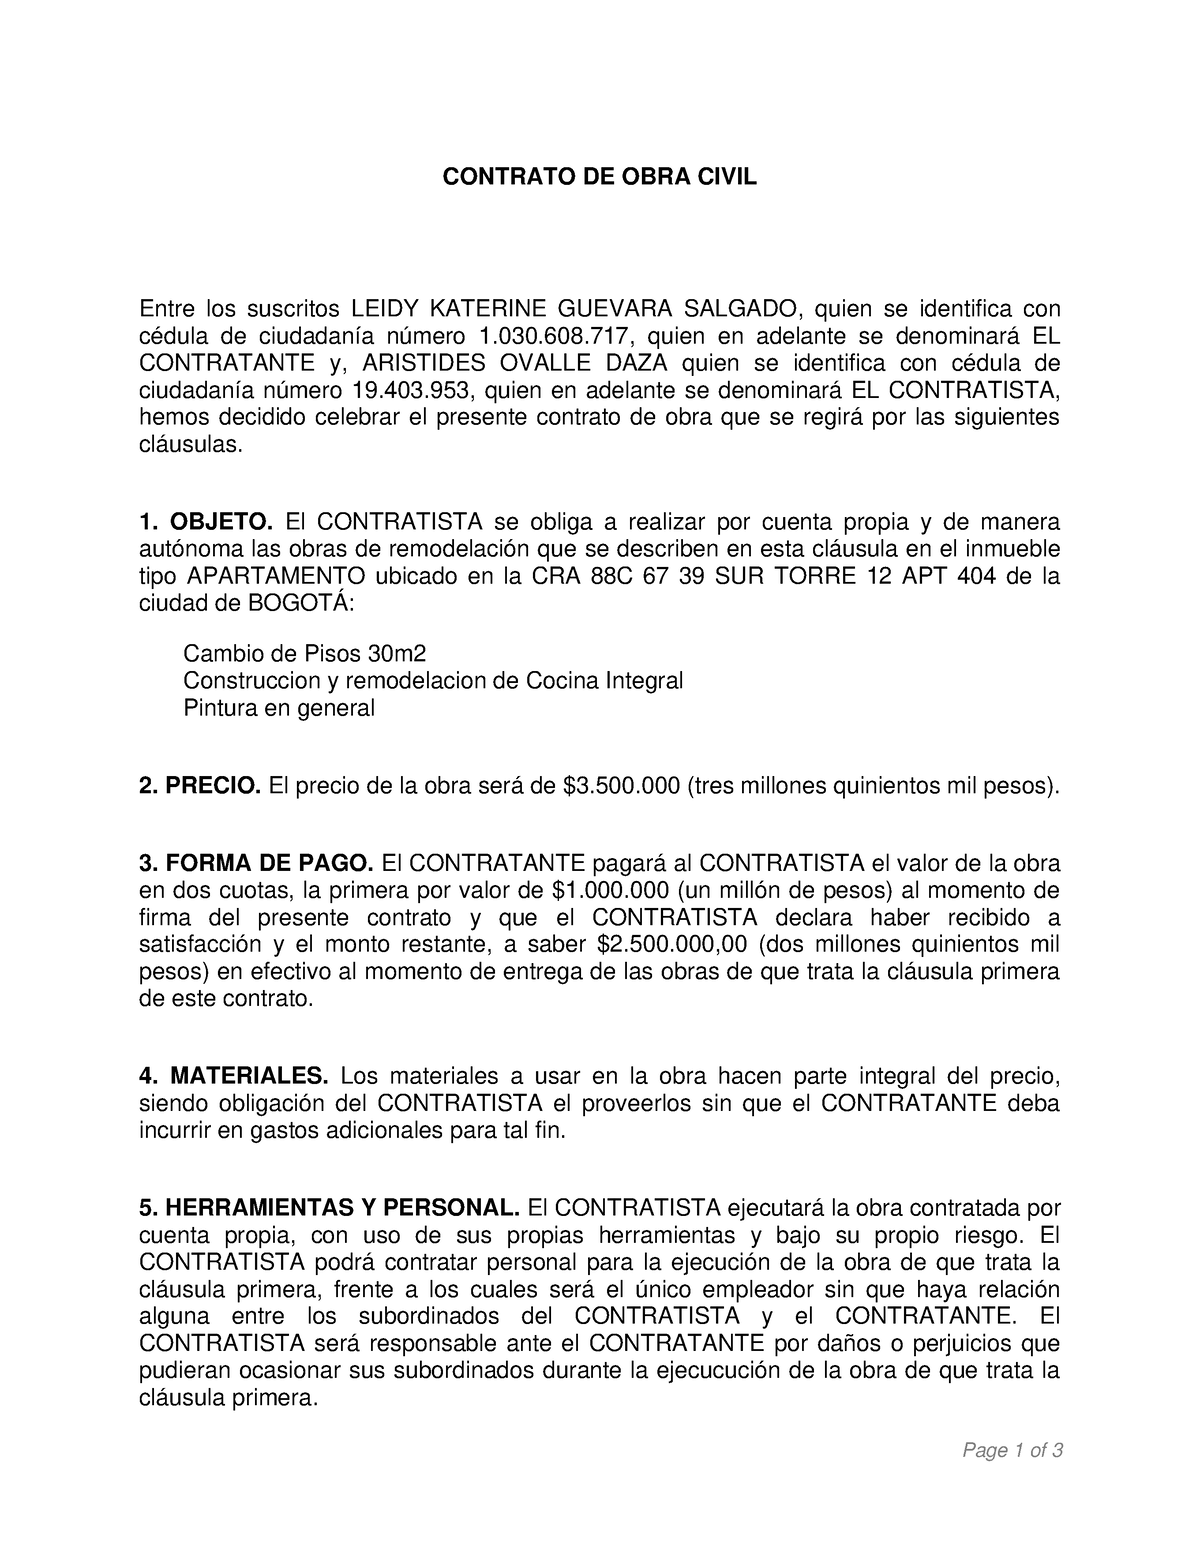 Contrato de obra civil Lk - Page 1 of 3 CONTRATO DE OBRA CIVIL Entre los  suscritos LEIDY KATERINE - Studocu